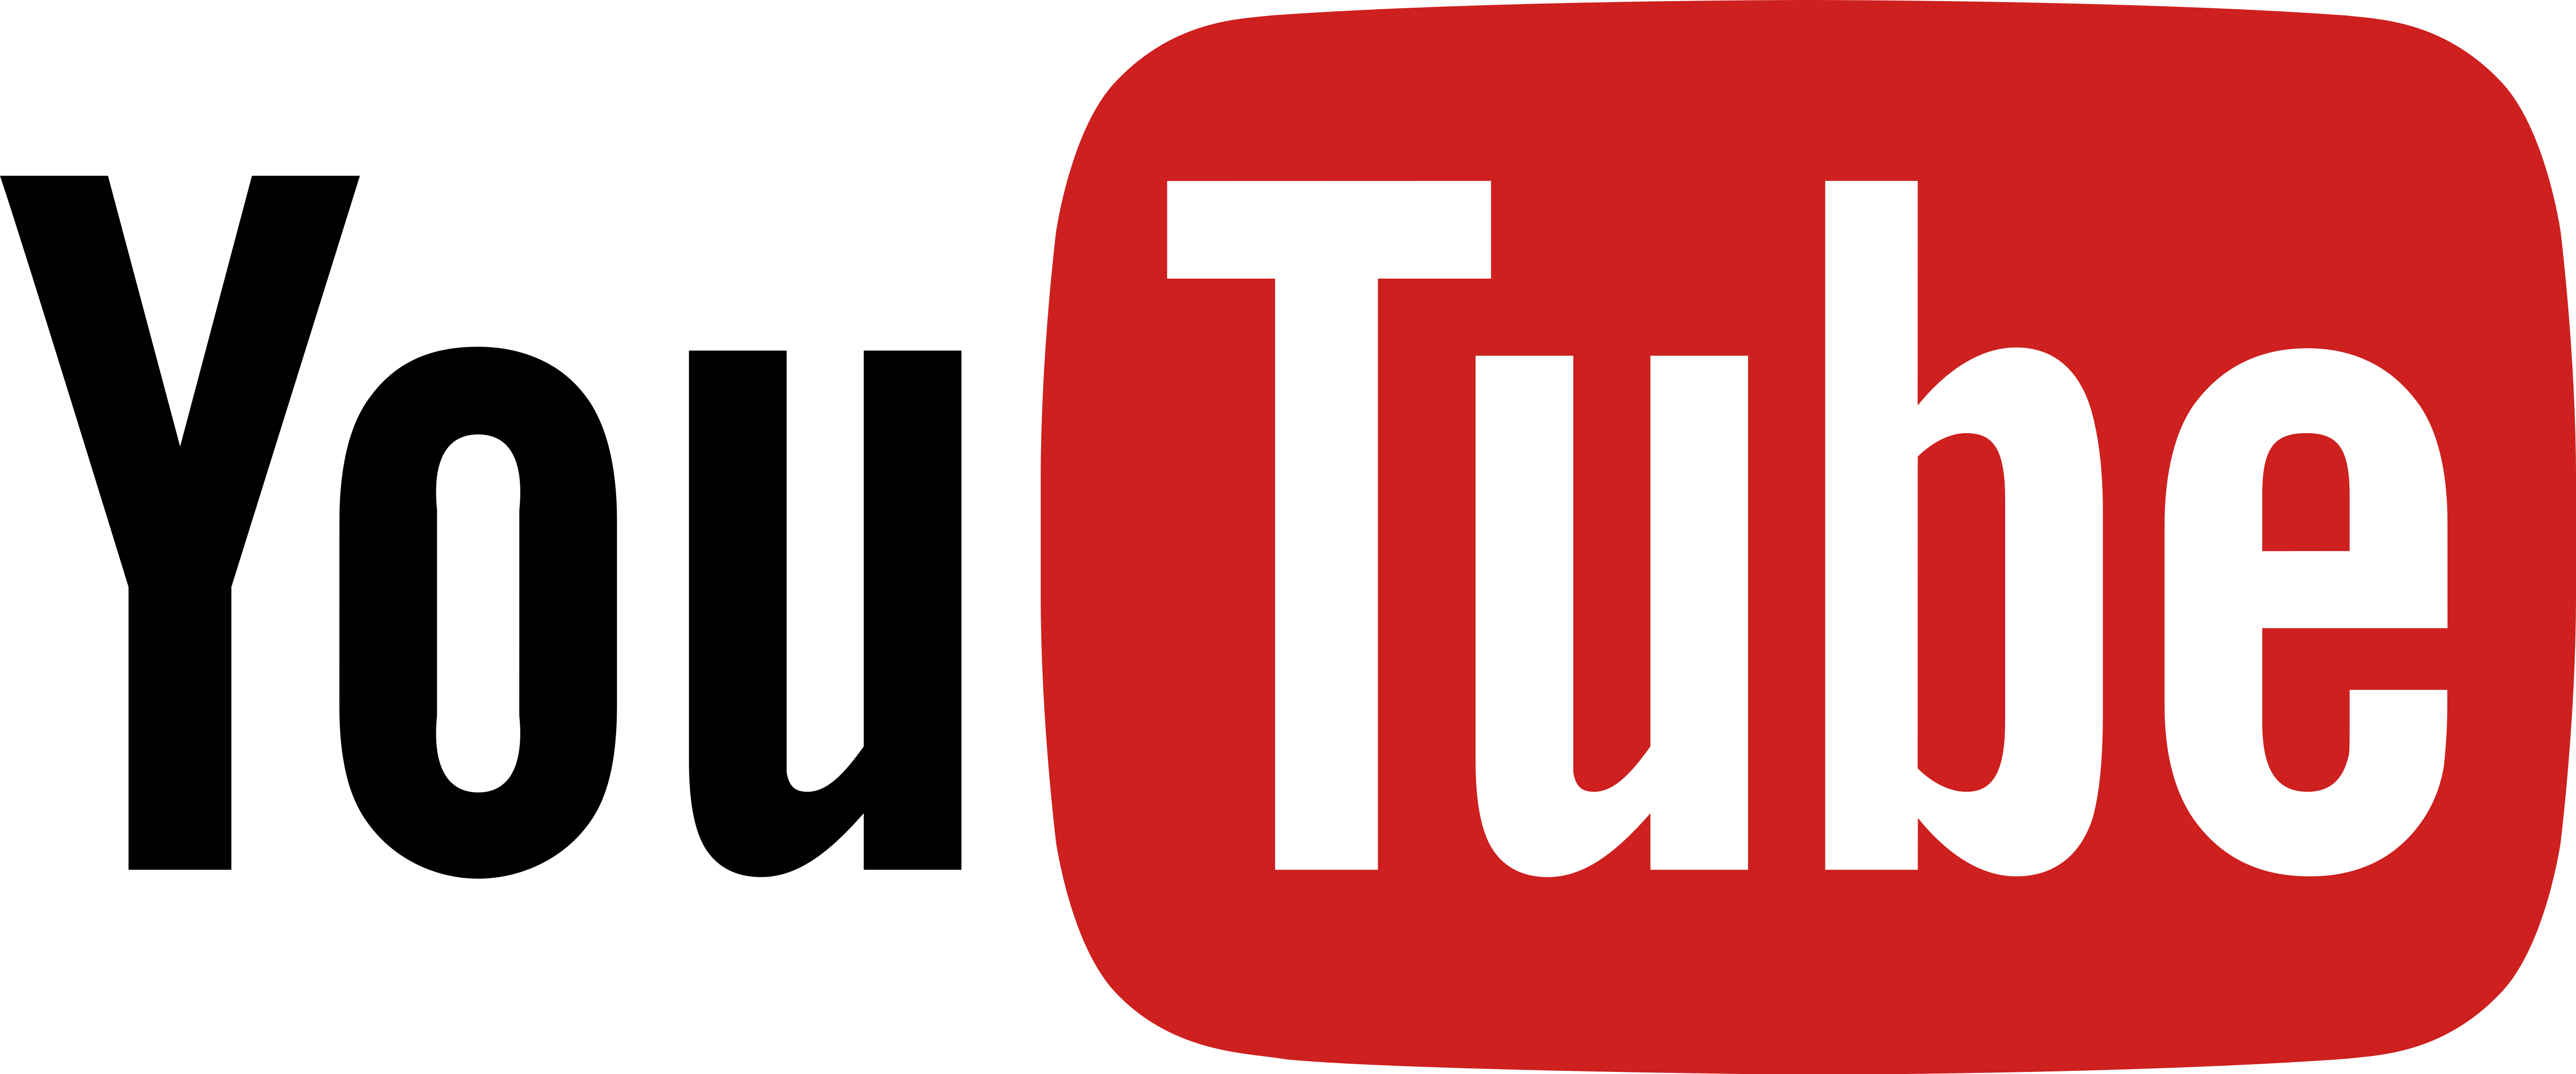 Youtube Logo 1.png 25 De Outubro De 2016 155 Kb 5000 × 2085 - Youtube, Transparent background PNG HD thumbnail